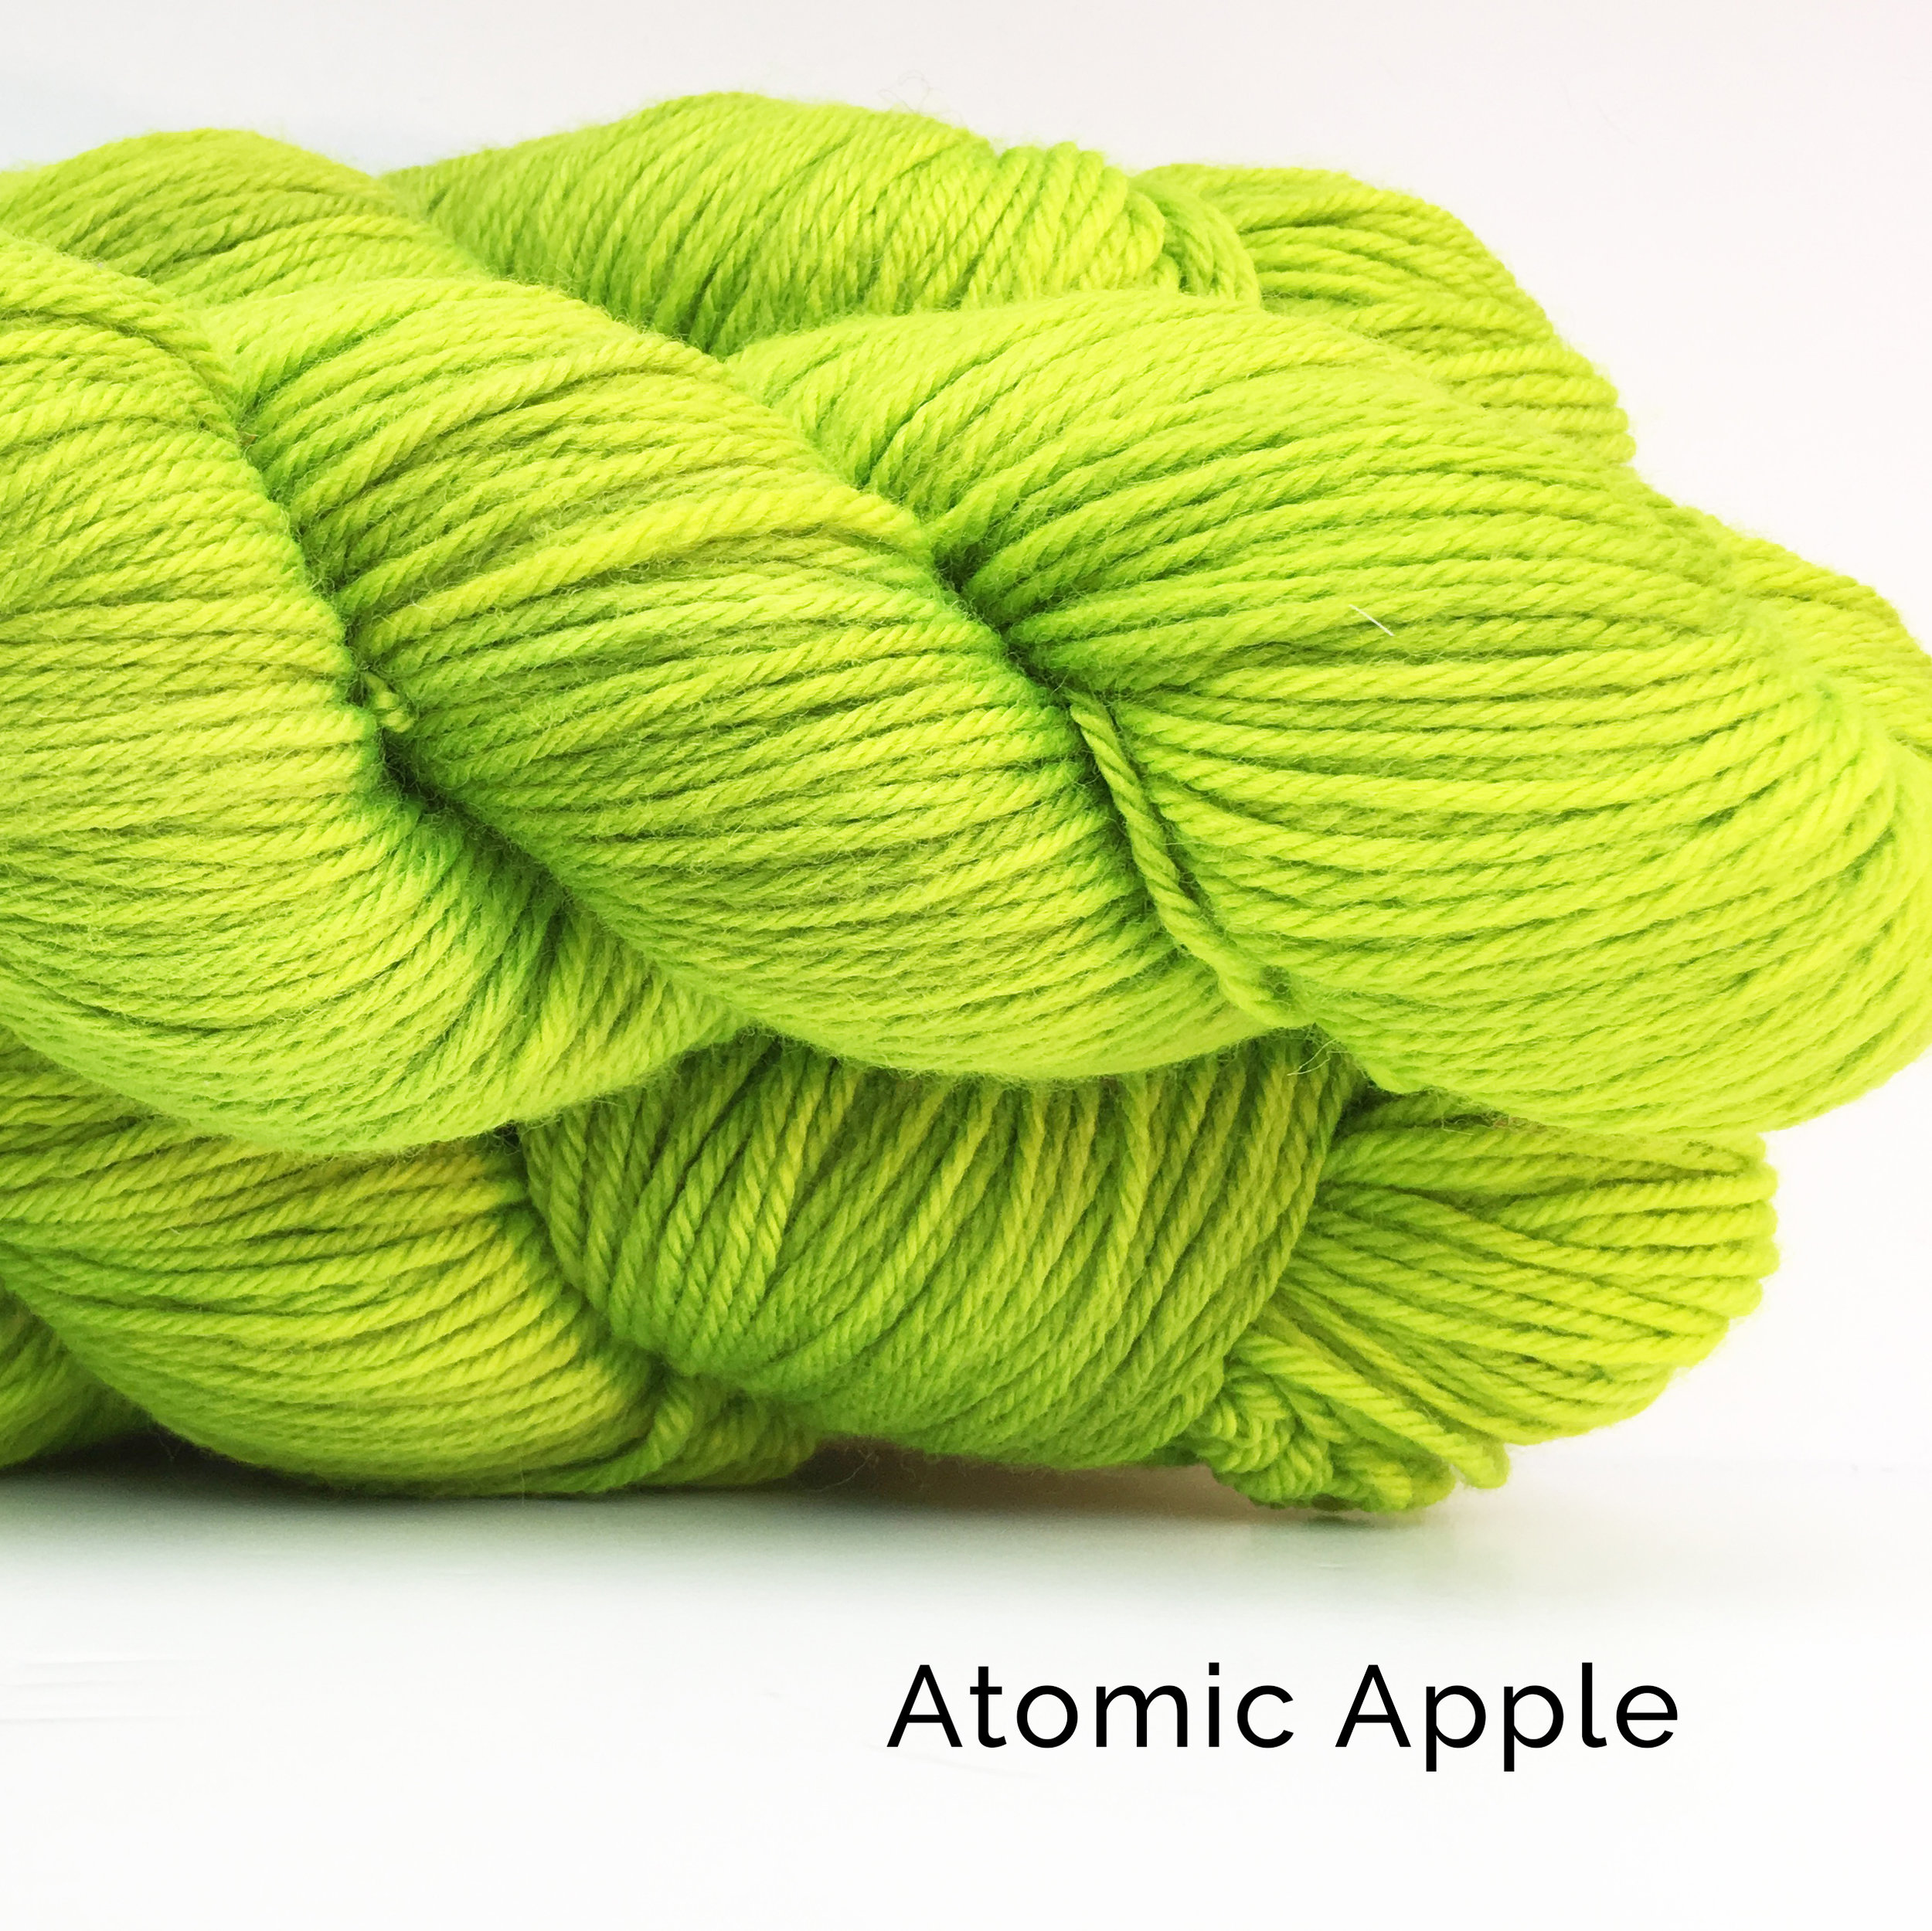 Atomic Apple.jpg